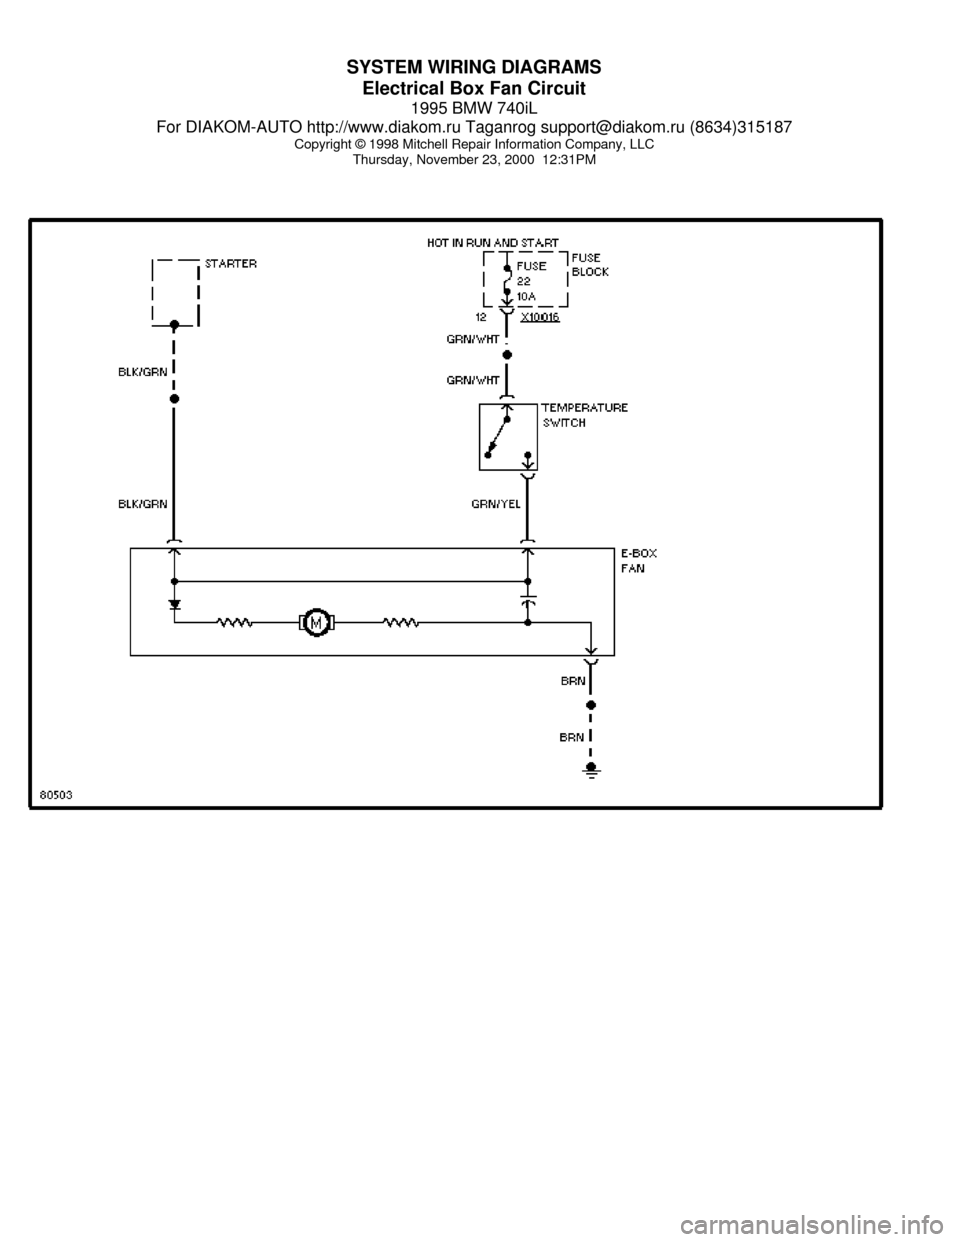 BMW 740il 1995 E38 System Wiring Diagrams SYSTEM WIRING DIAGRAMS
Electrical Box Fan Circuit
1995 BMW 740iL
For DIAKOM-AUTO http://www.diakom.ru Taganrog support@diakom.ru (8634)315187
Copyright © 1998 Mitchell Repair Information Company, LLC